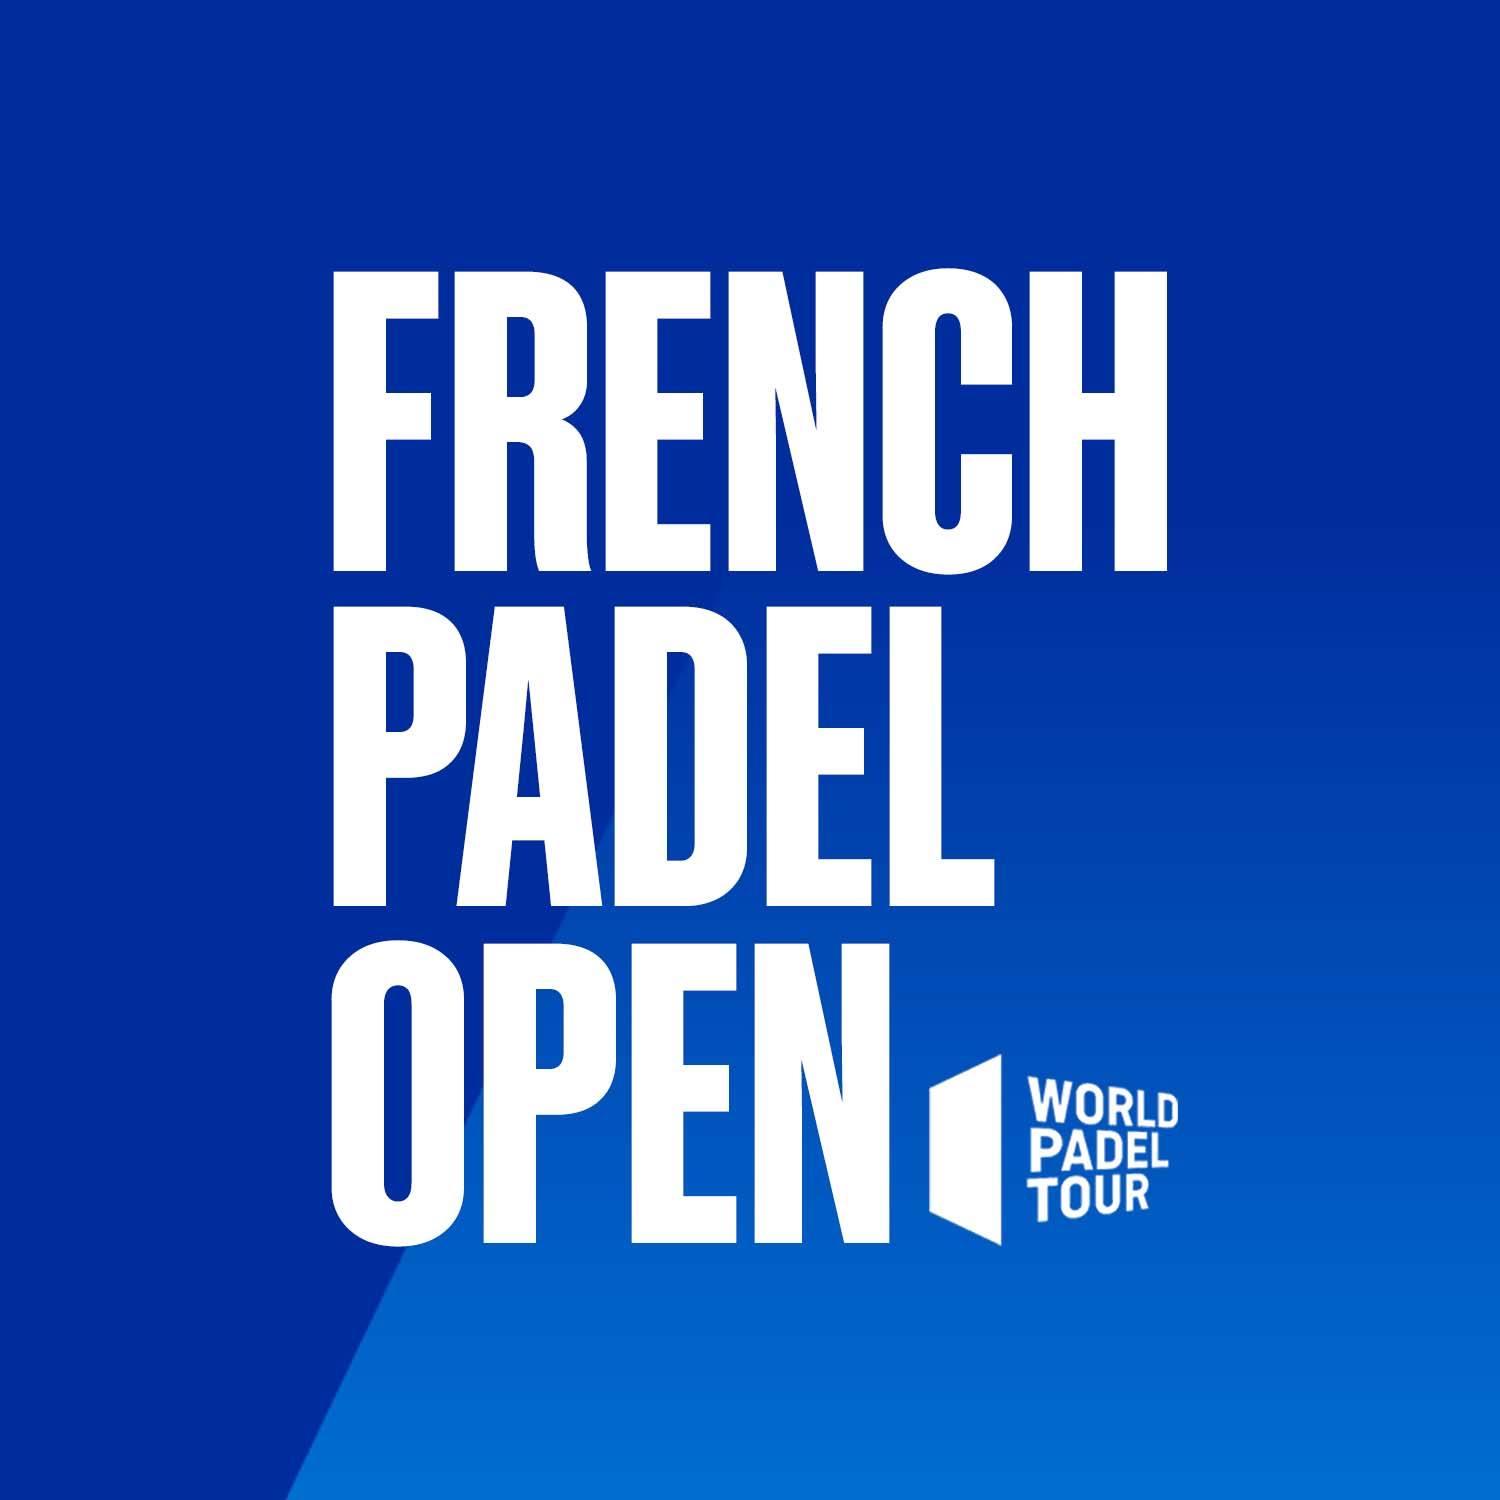 World Padel Tour 全仏オープン：チケットオフィスが間もなくオープンします